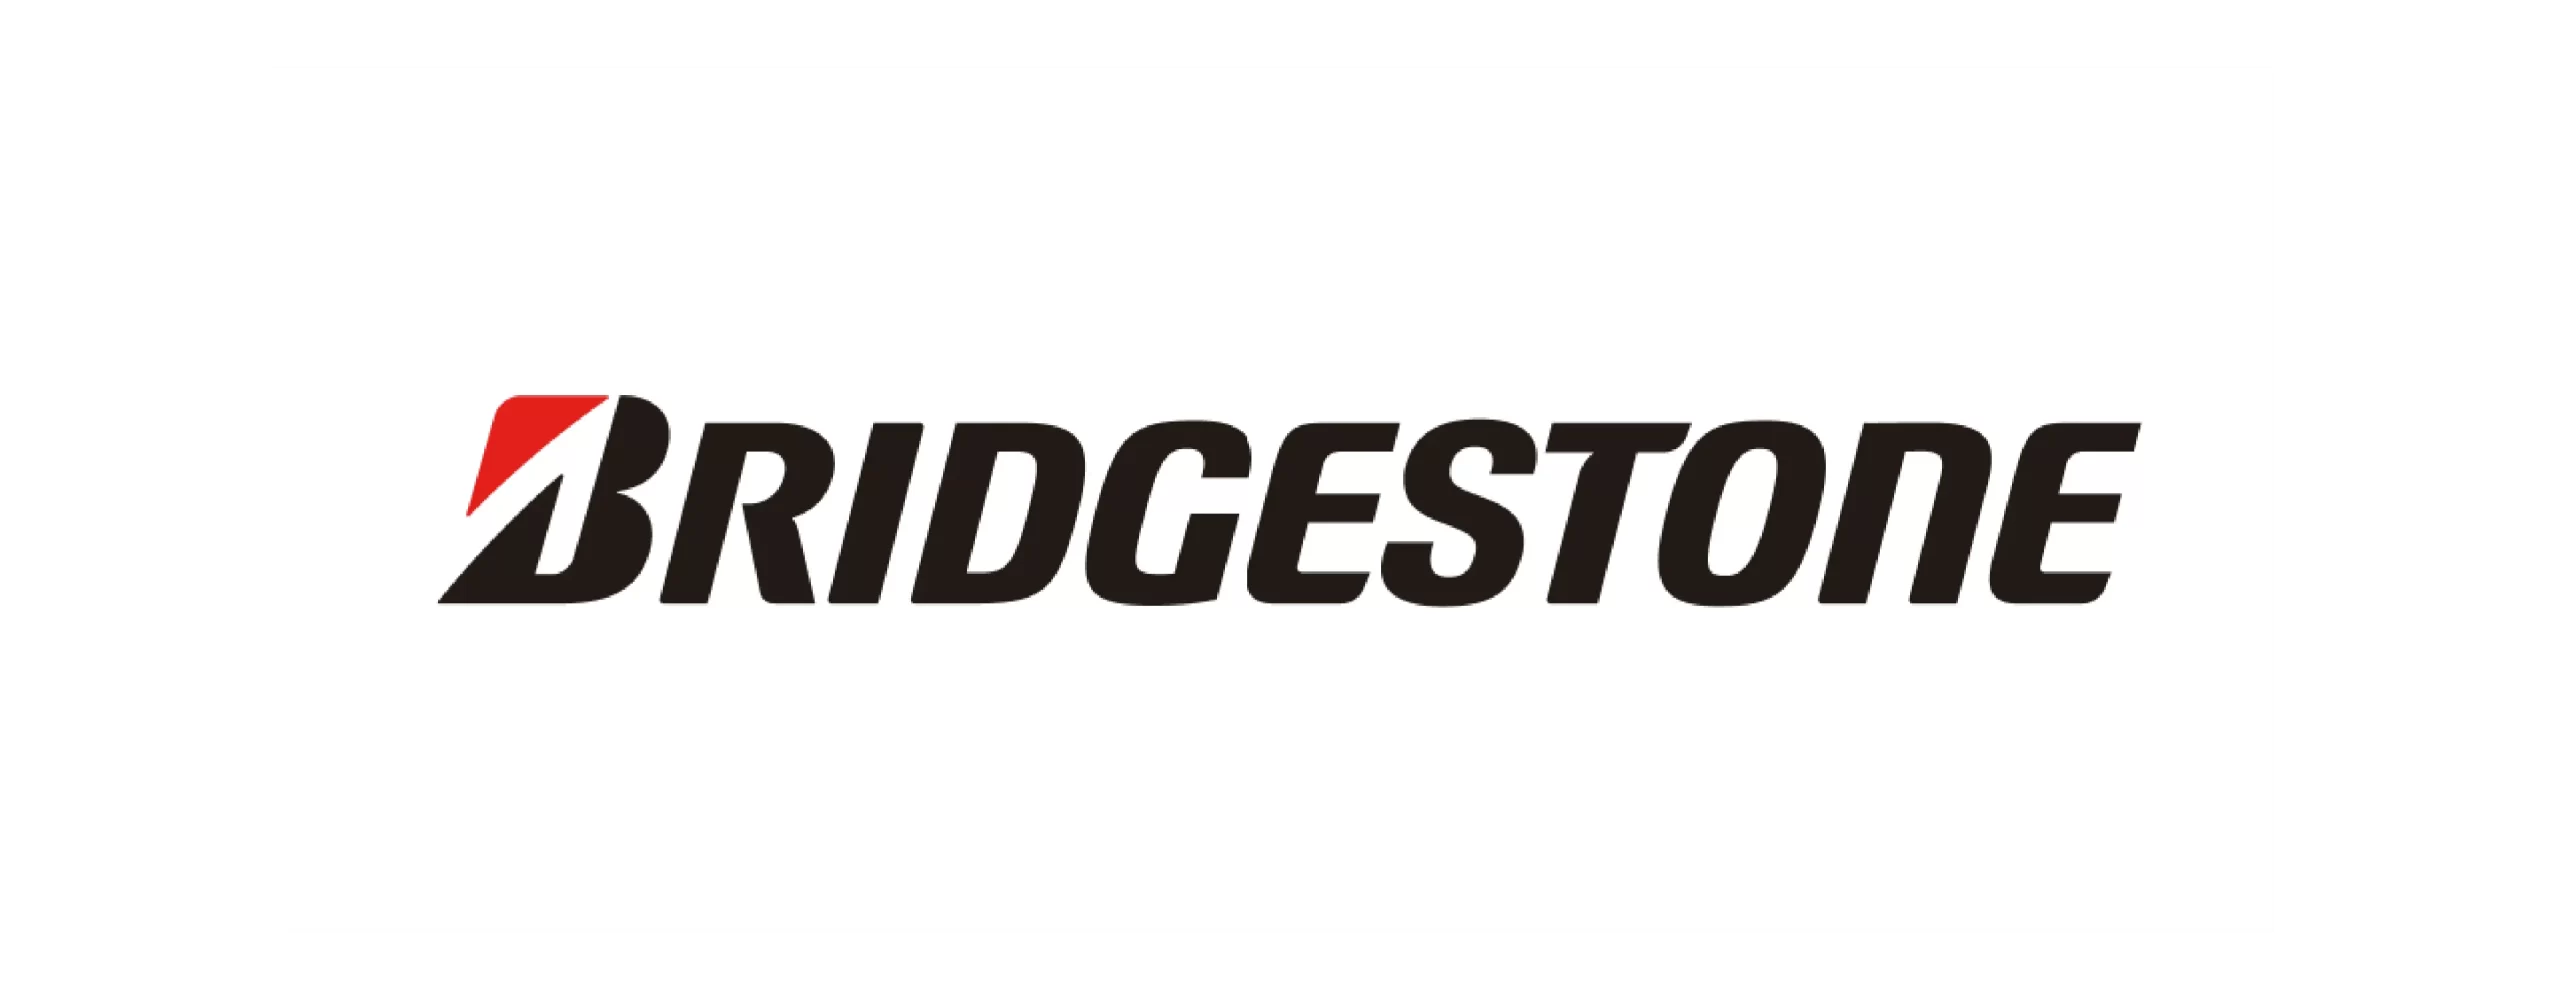 Bridgestone logo; simply the name Bridgestone in black stylized text.